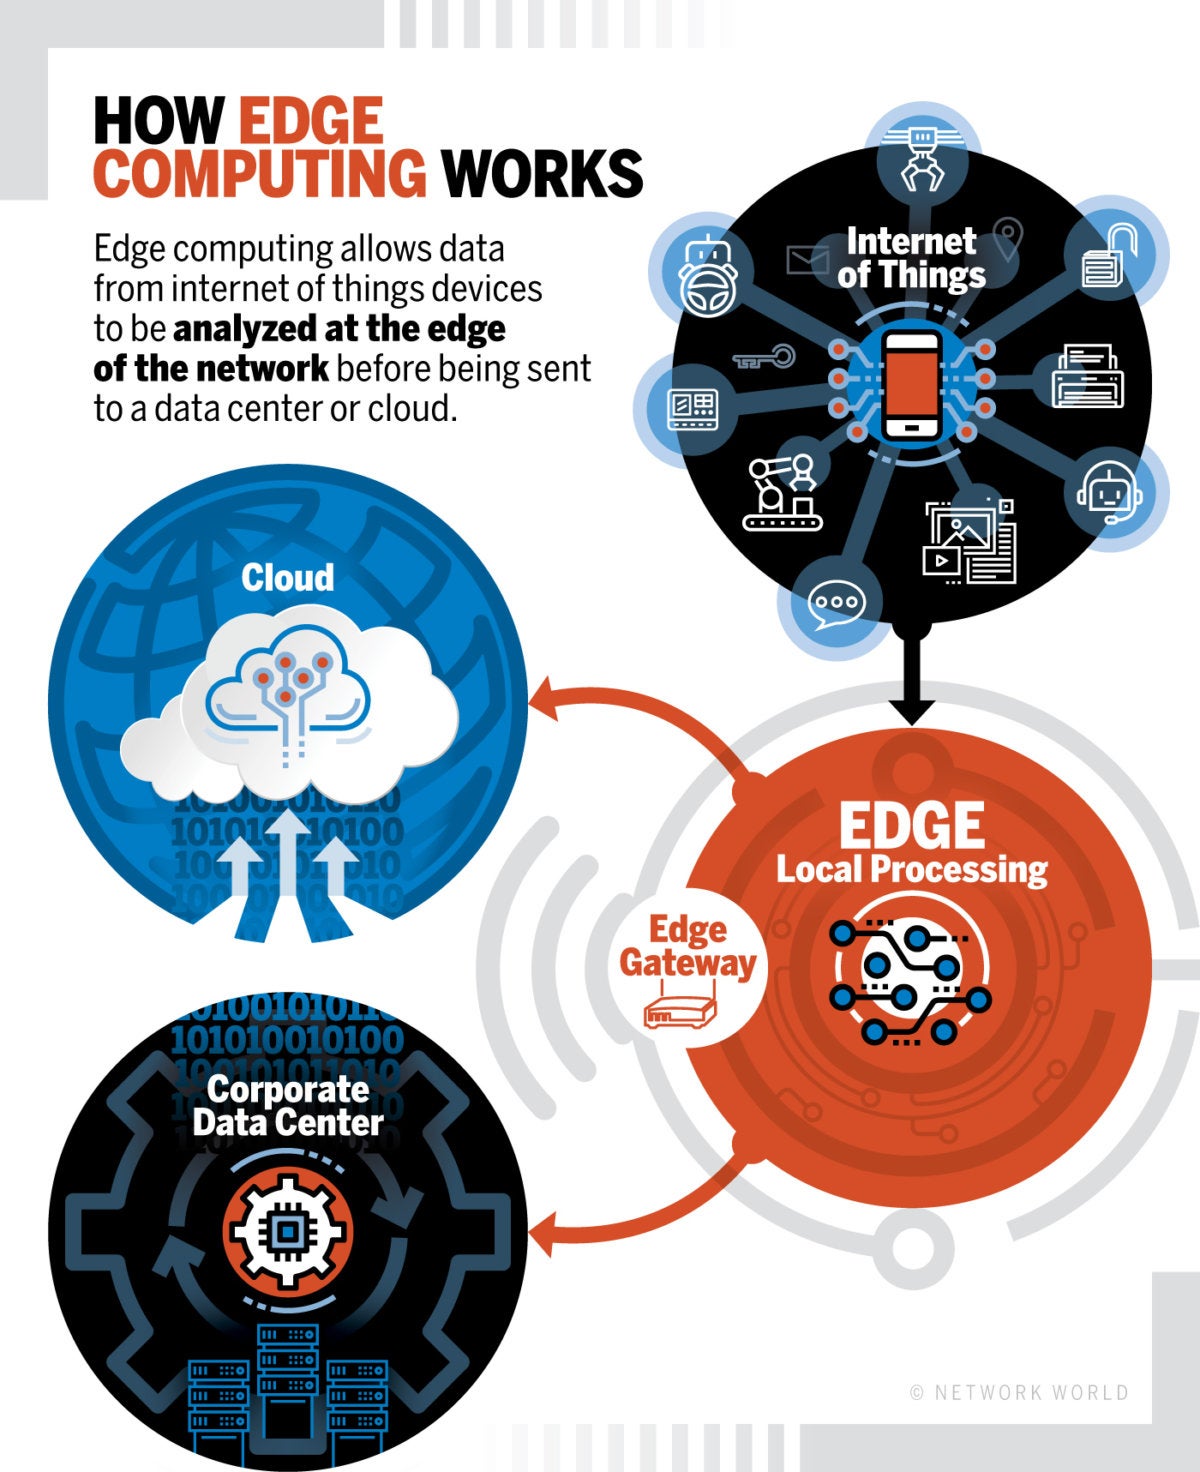 Network World - How Edge Computing Works [diagram]